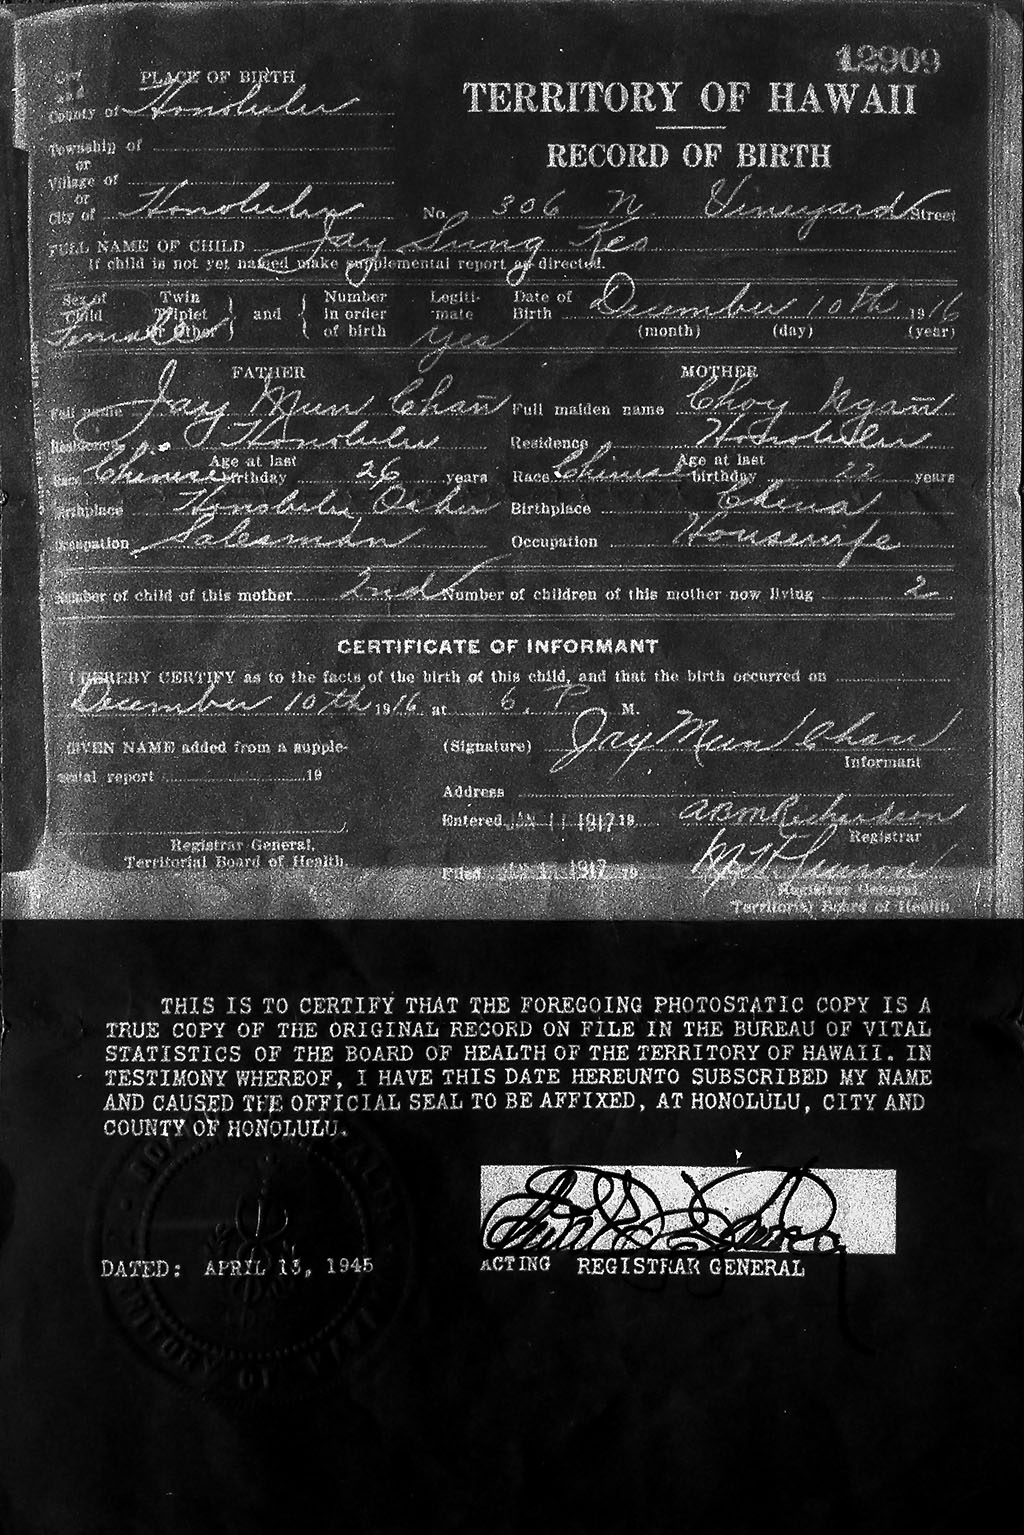 Lily S. K. Jays Birth Certificate